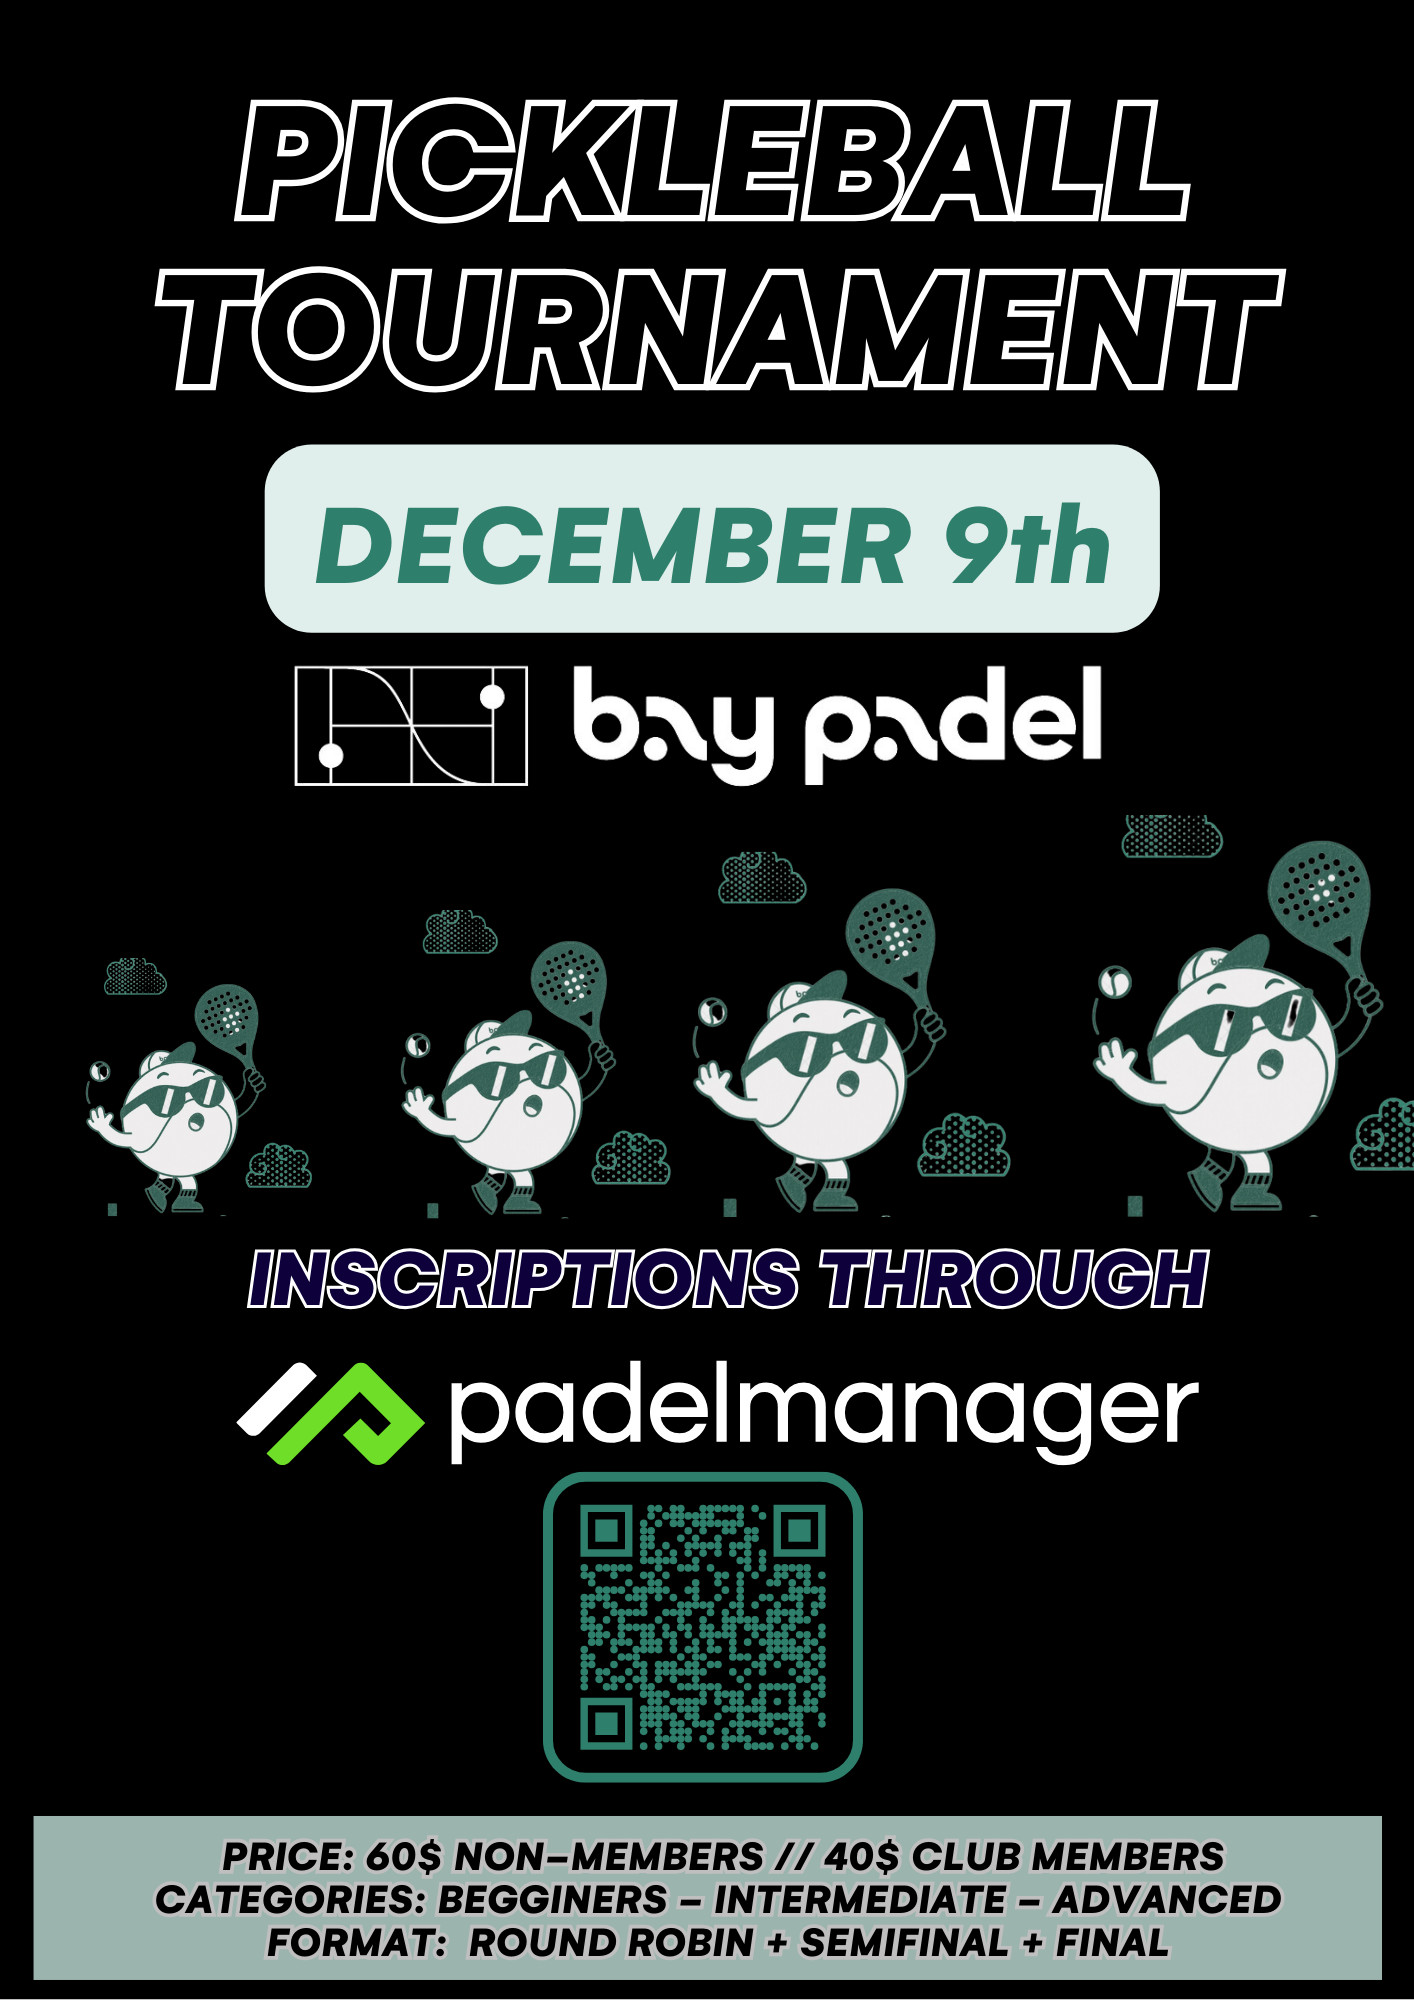 Pickleball – Round Robin Tournament December 9th